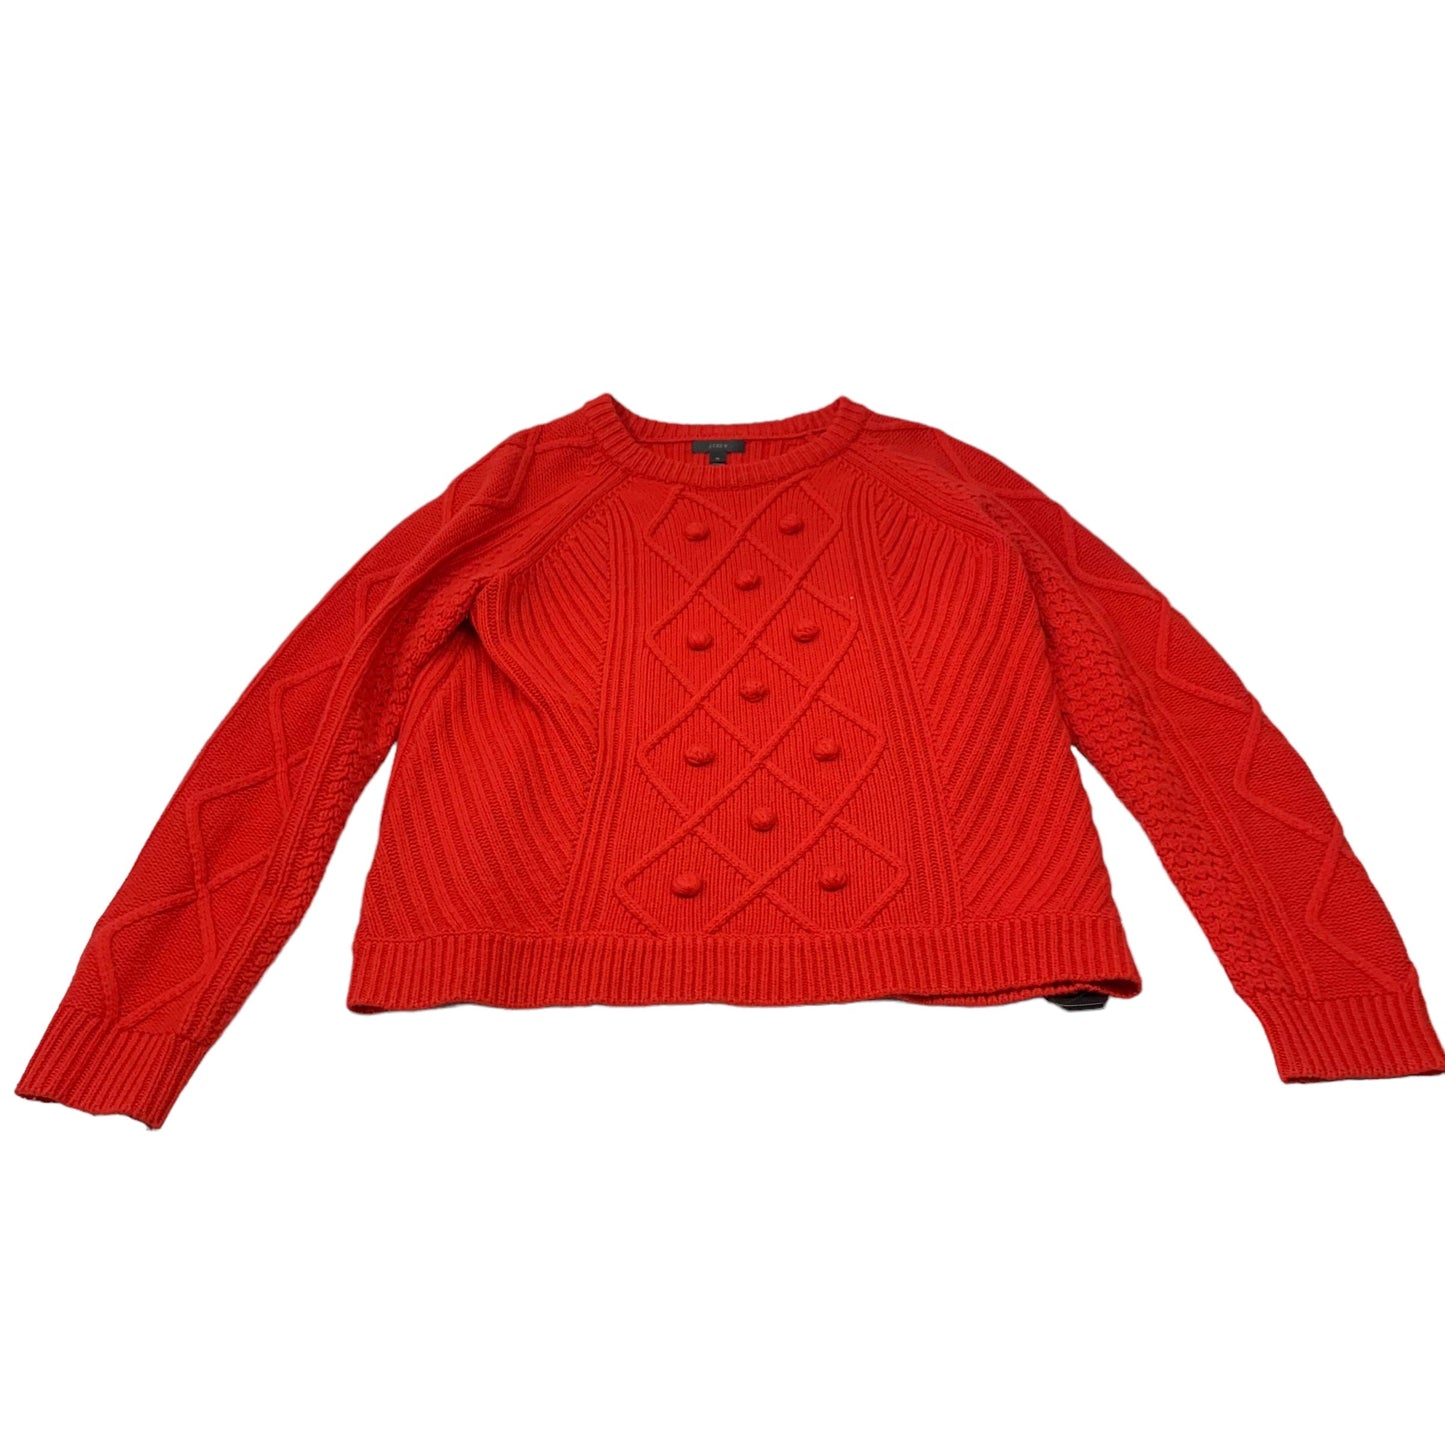 Sweater By J Crew  Size: Xl